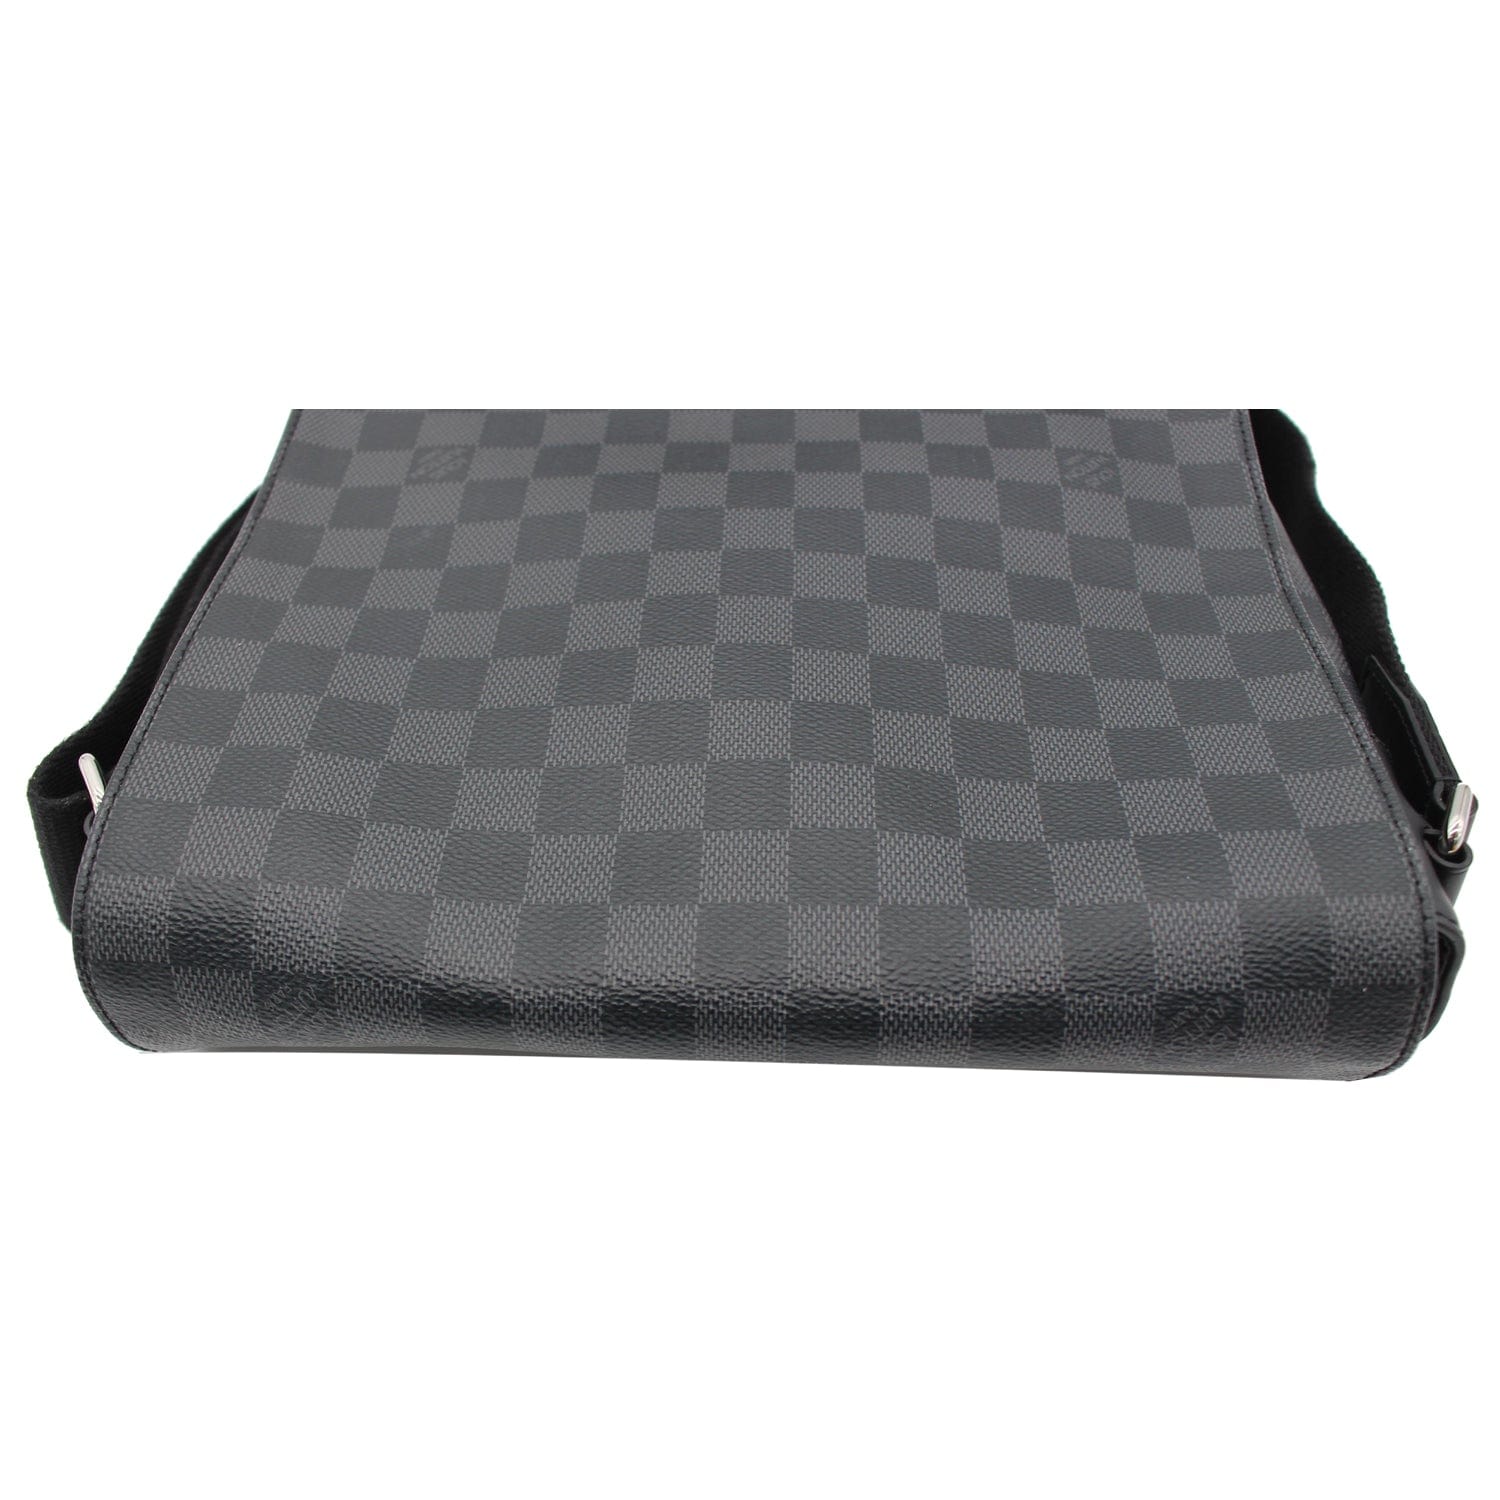 District cloth bag Louis Vuitton Black in Cloth - 33832893